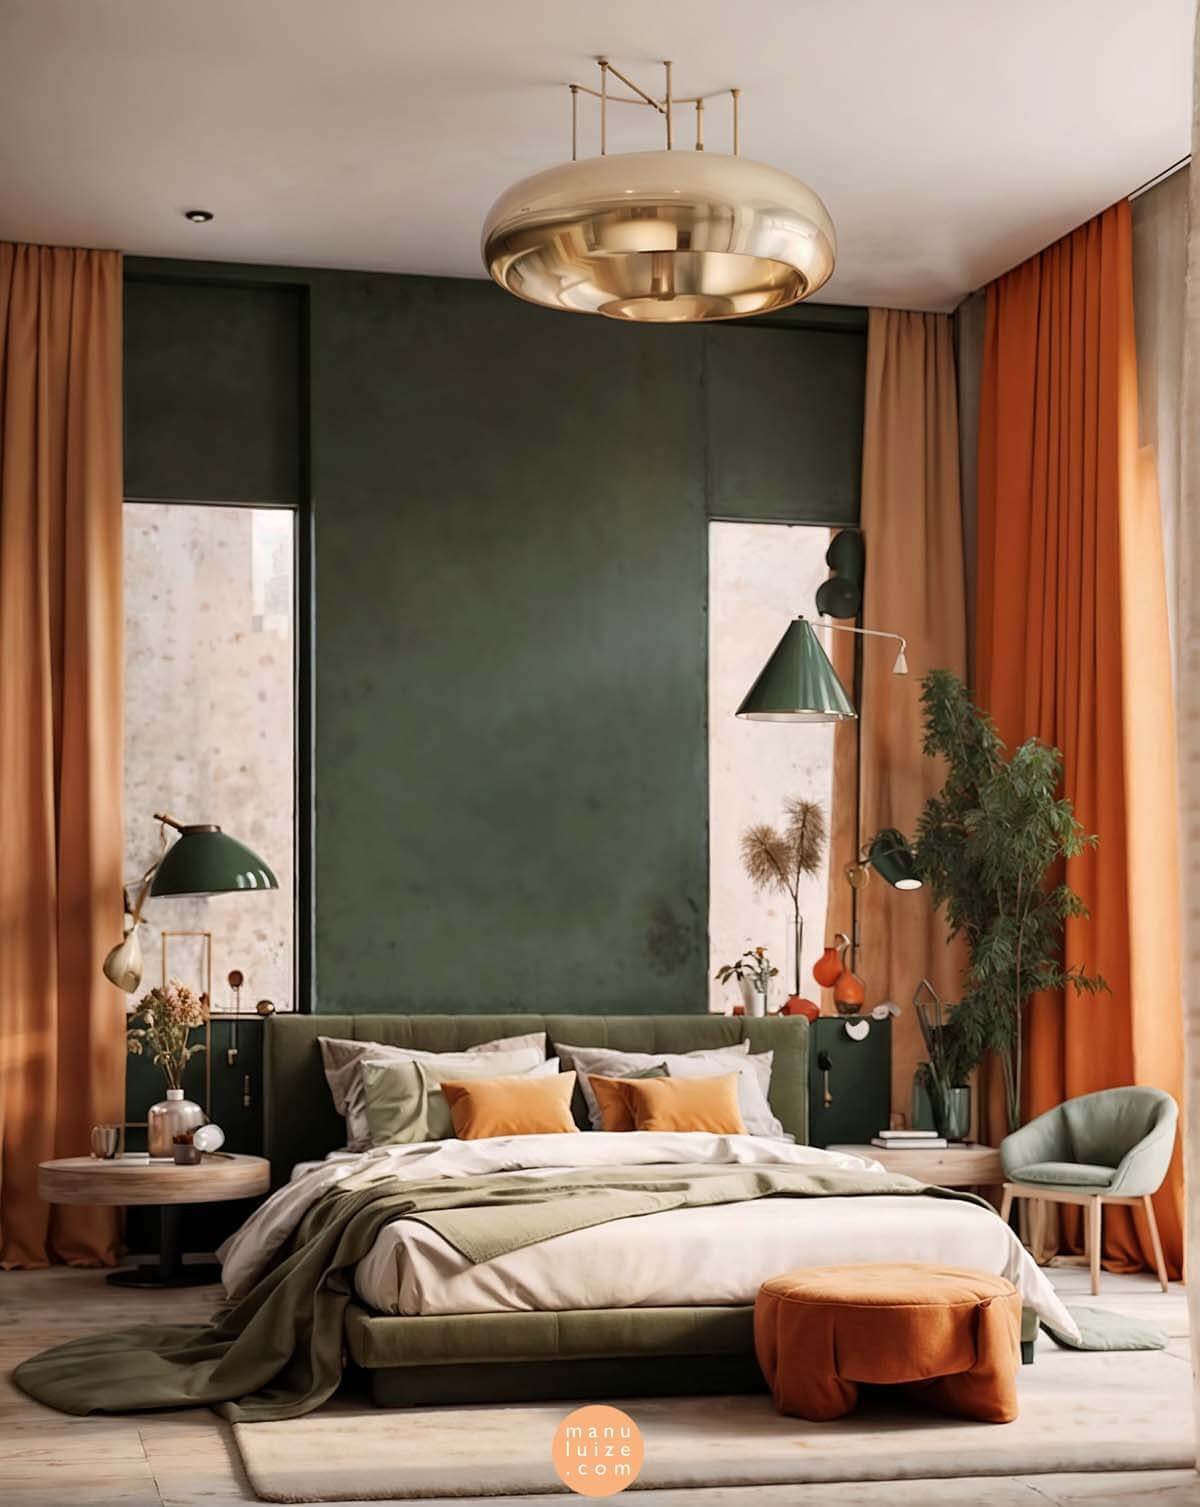 Aries bedroom decor: orange and dark green